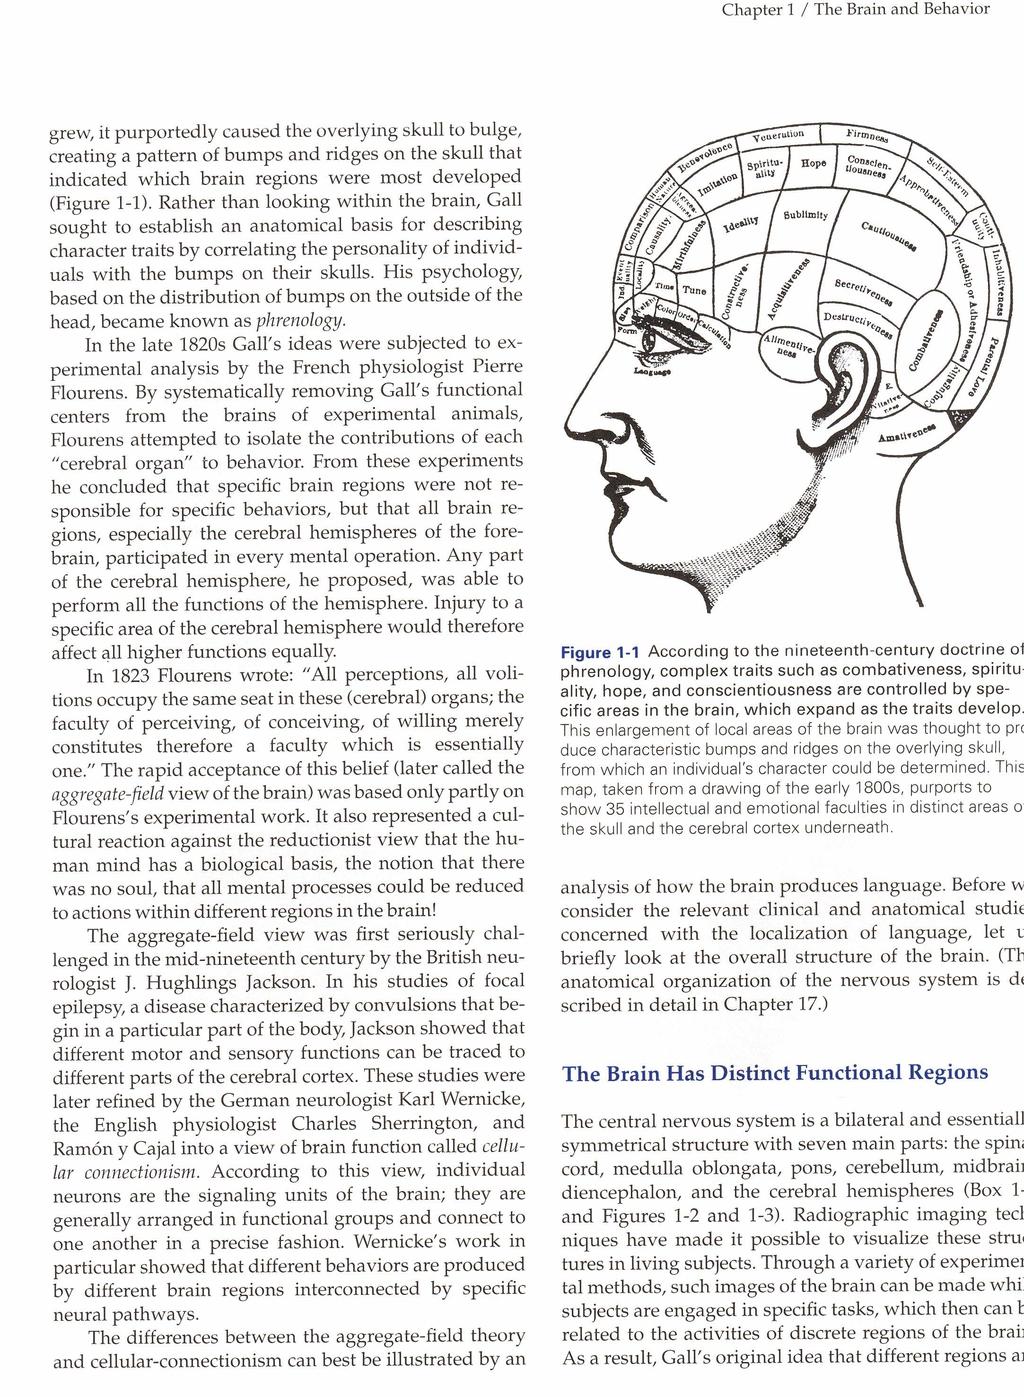 Phrenology Gall (1800s) 1) All behavior emanates from the brain.